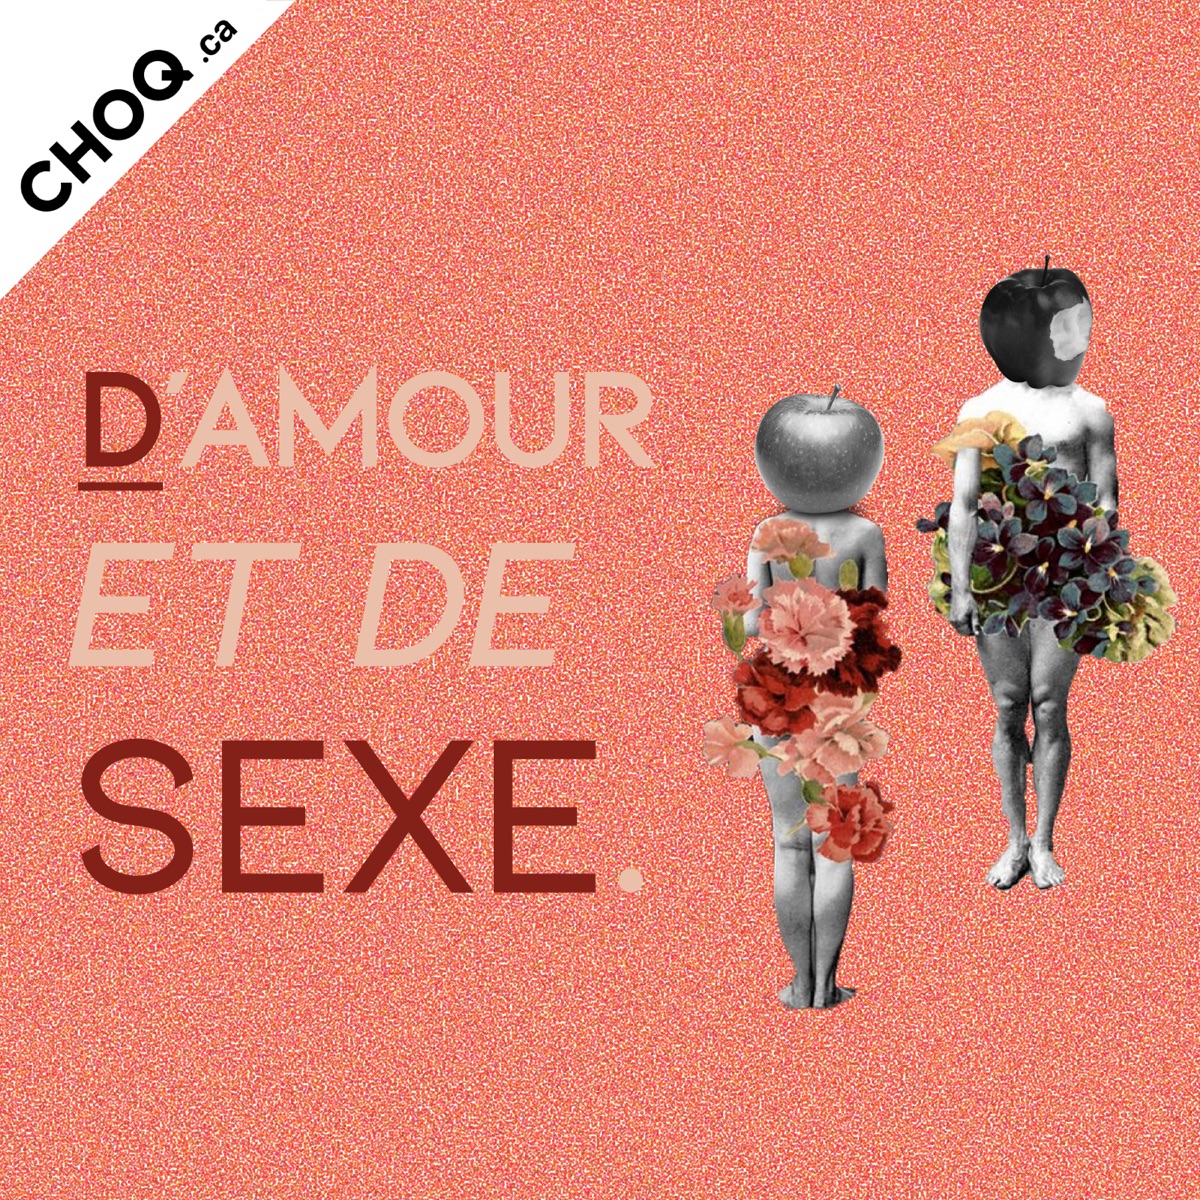 Damour et de sexe – Podcast